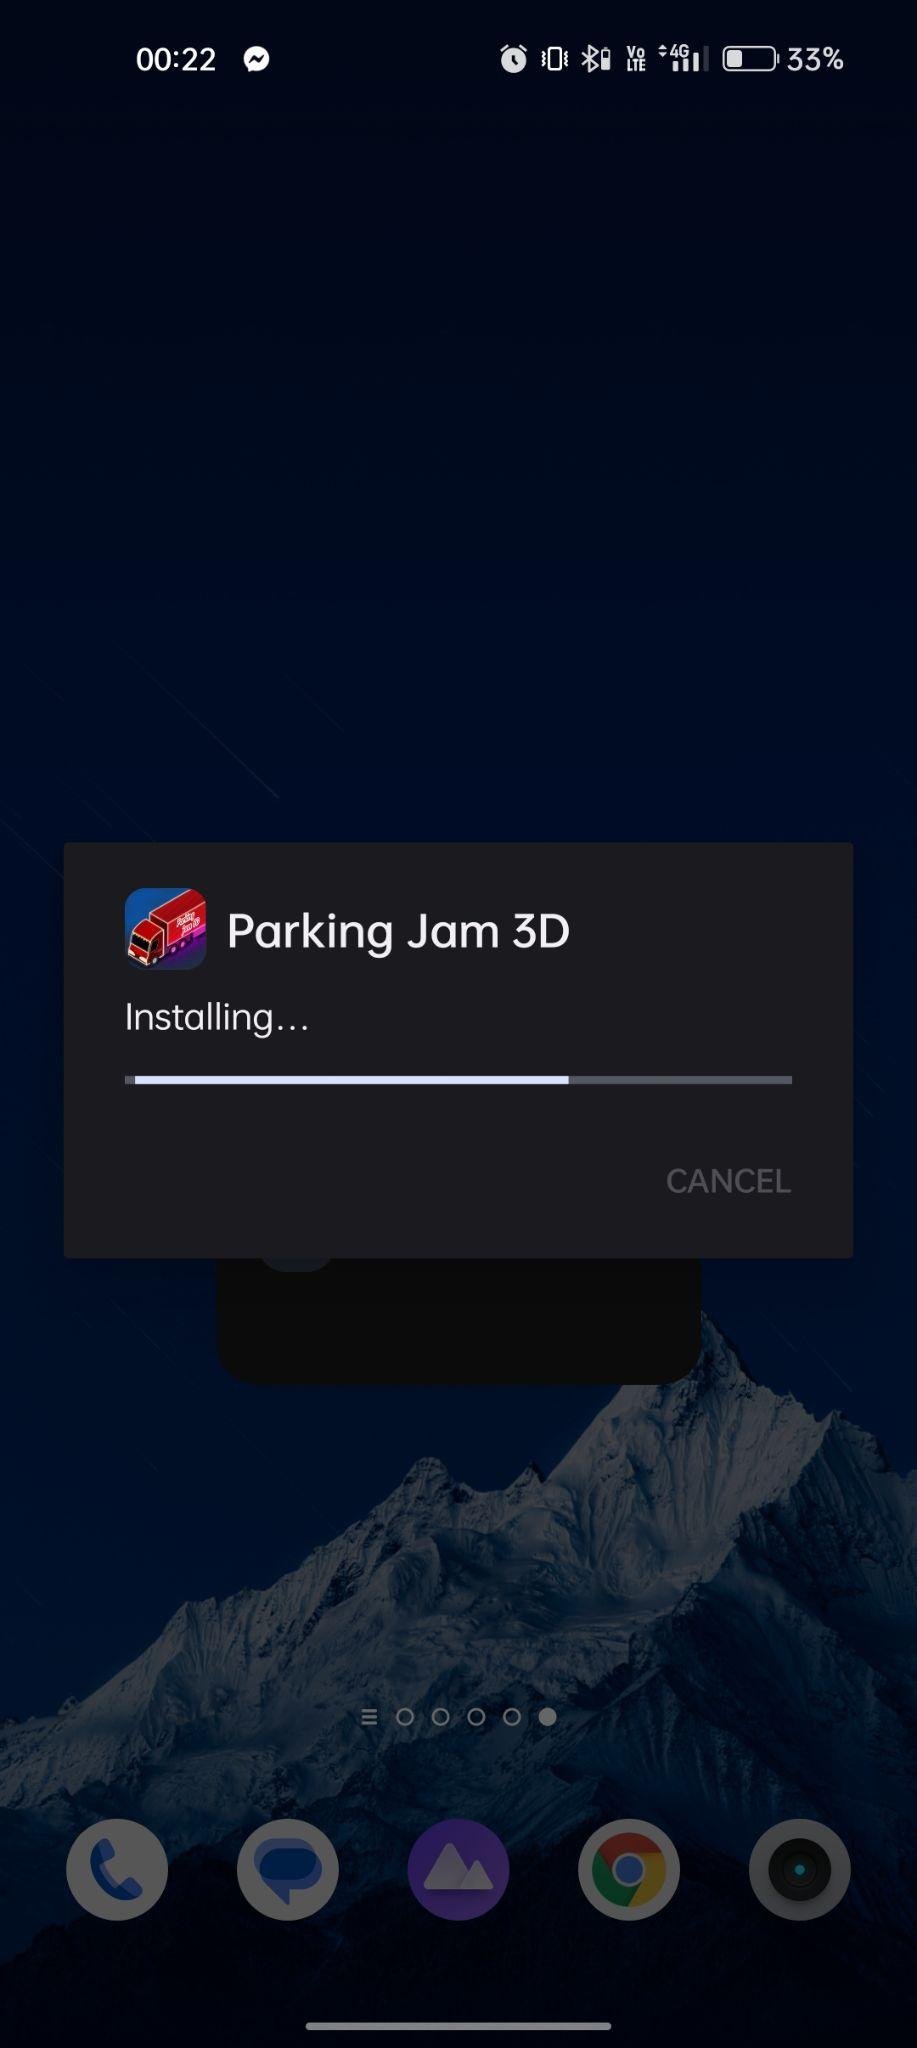 Parking Jam 3D apk installing